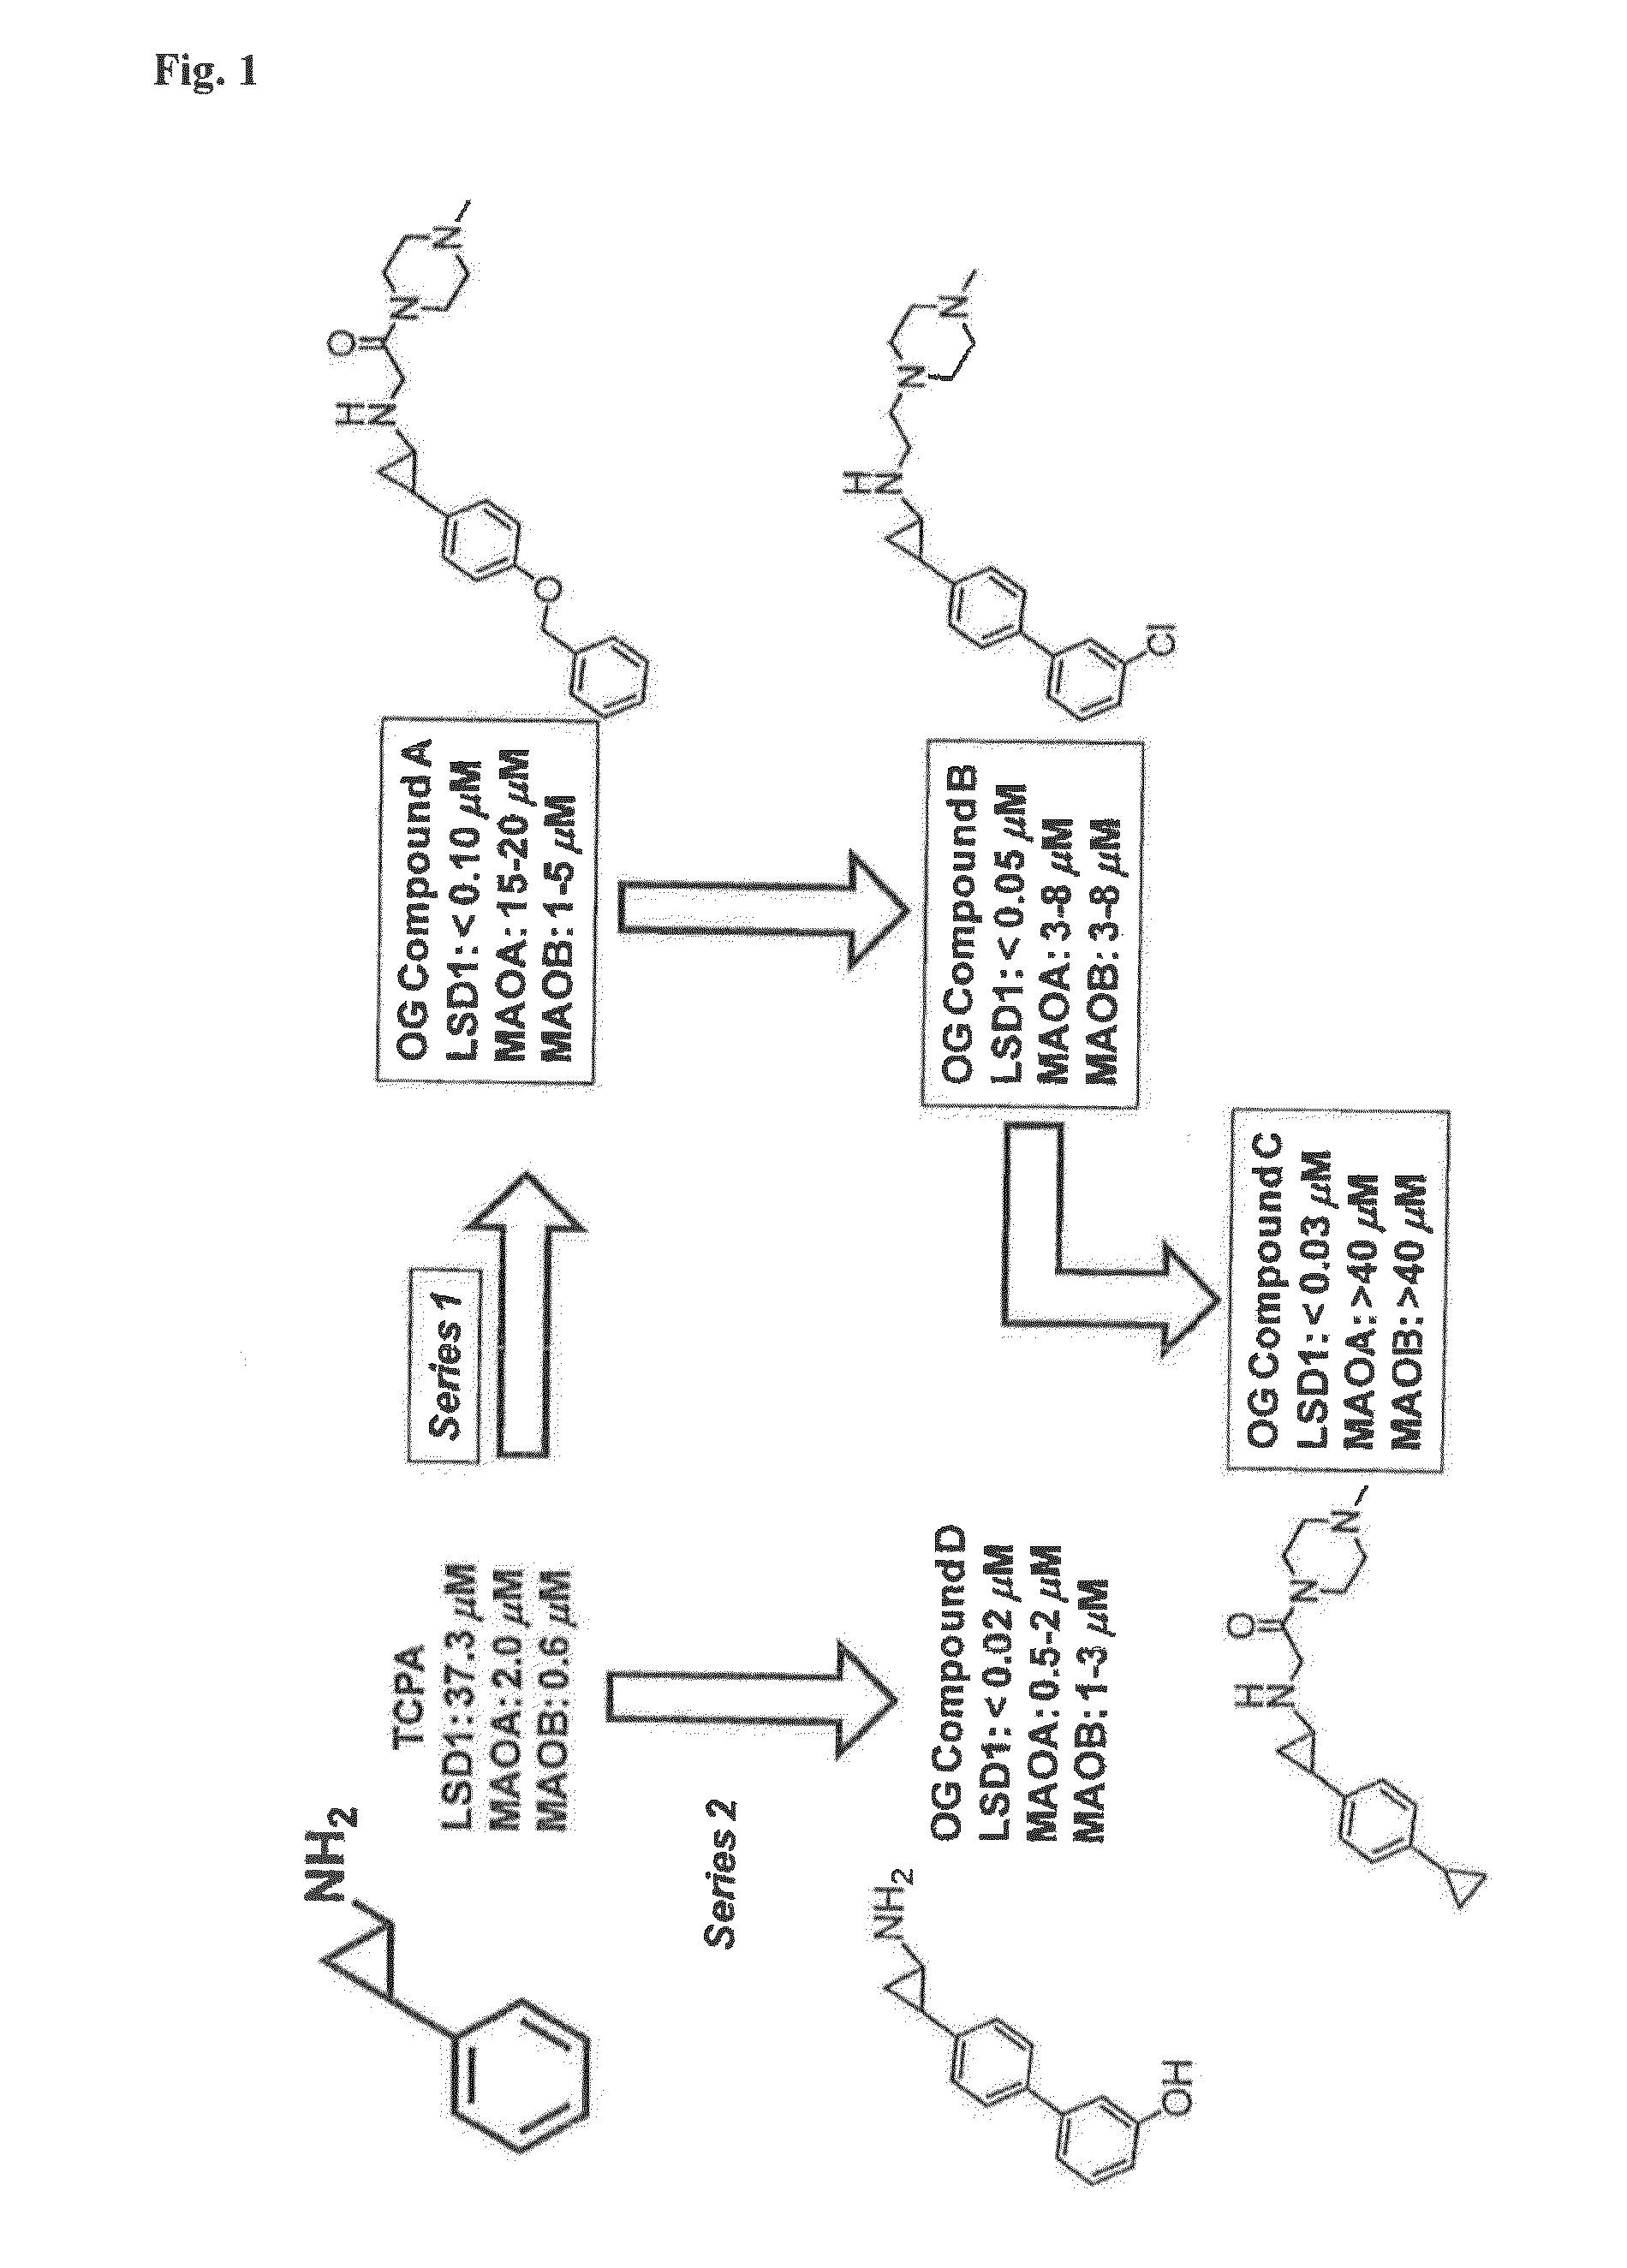 Cyclopropylamine derivatives useful as lsd1 inhibitors